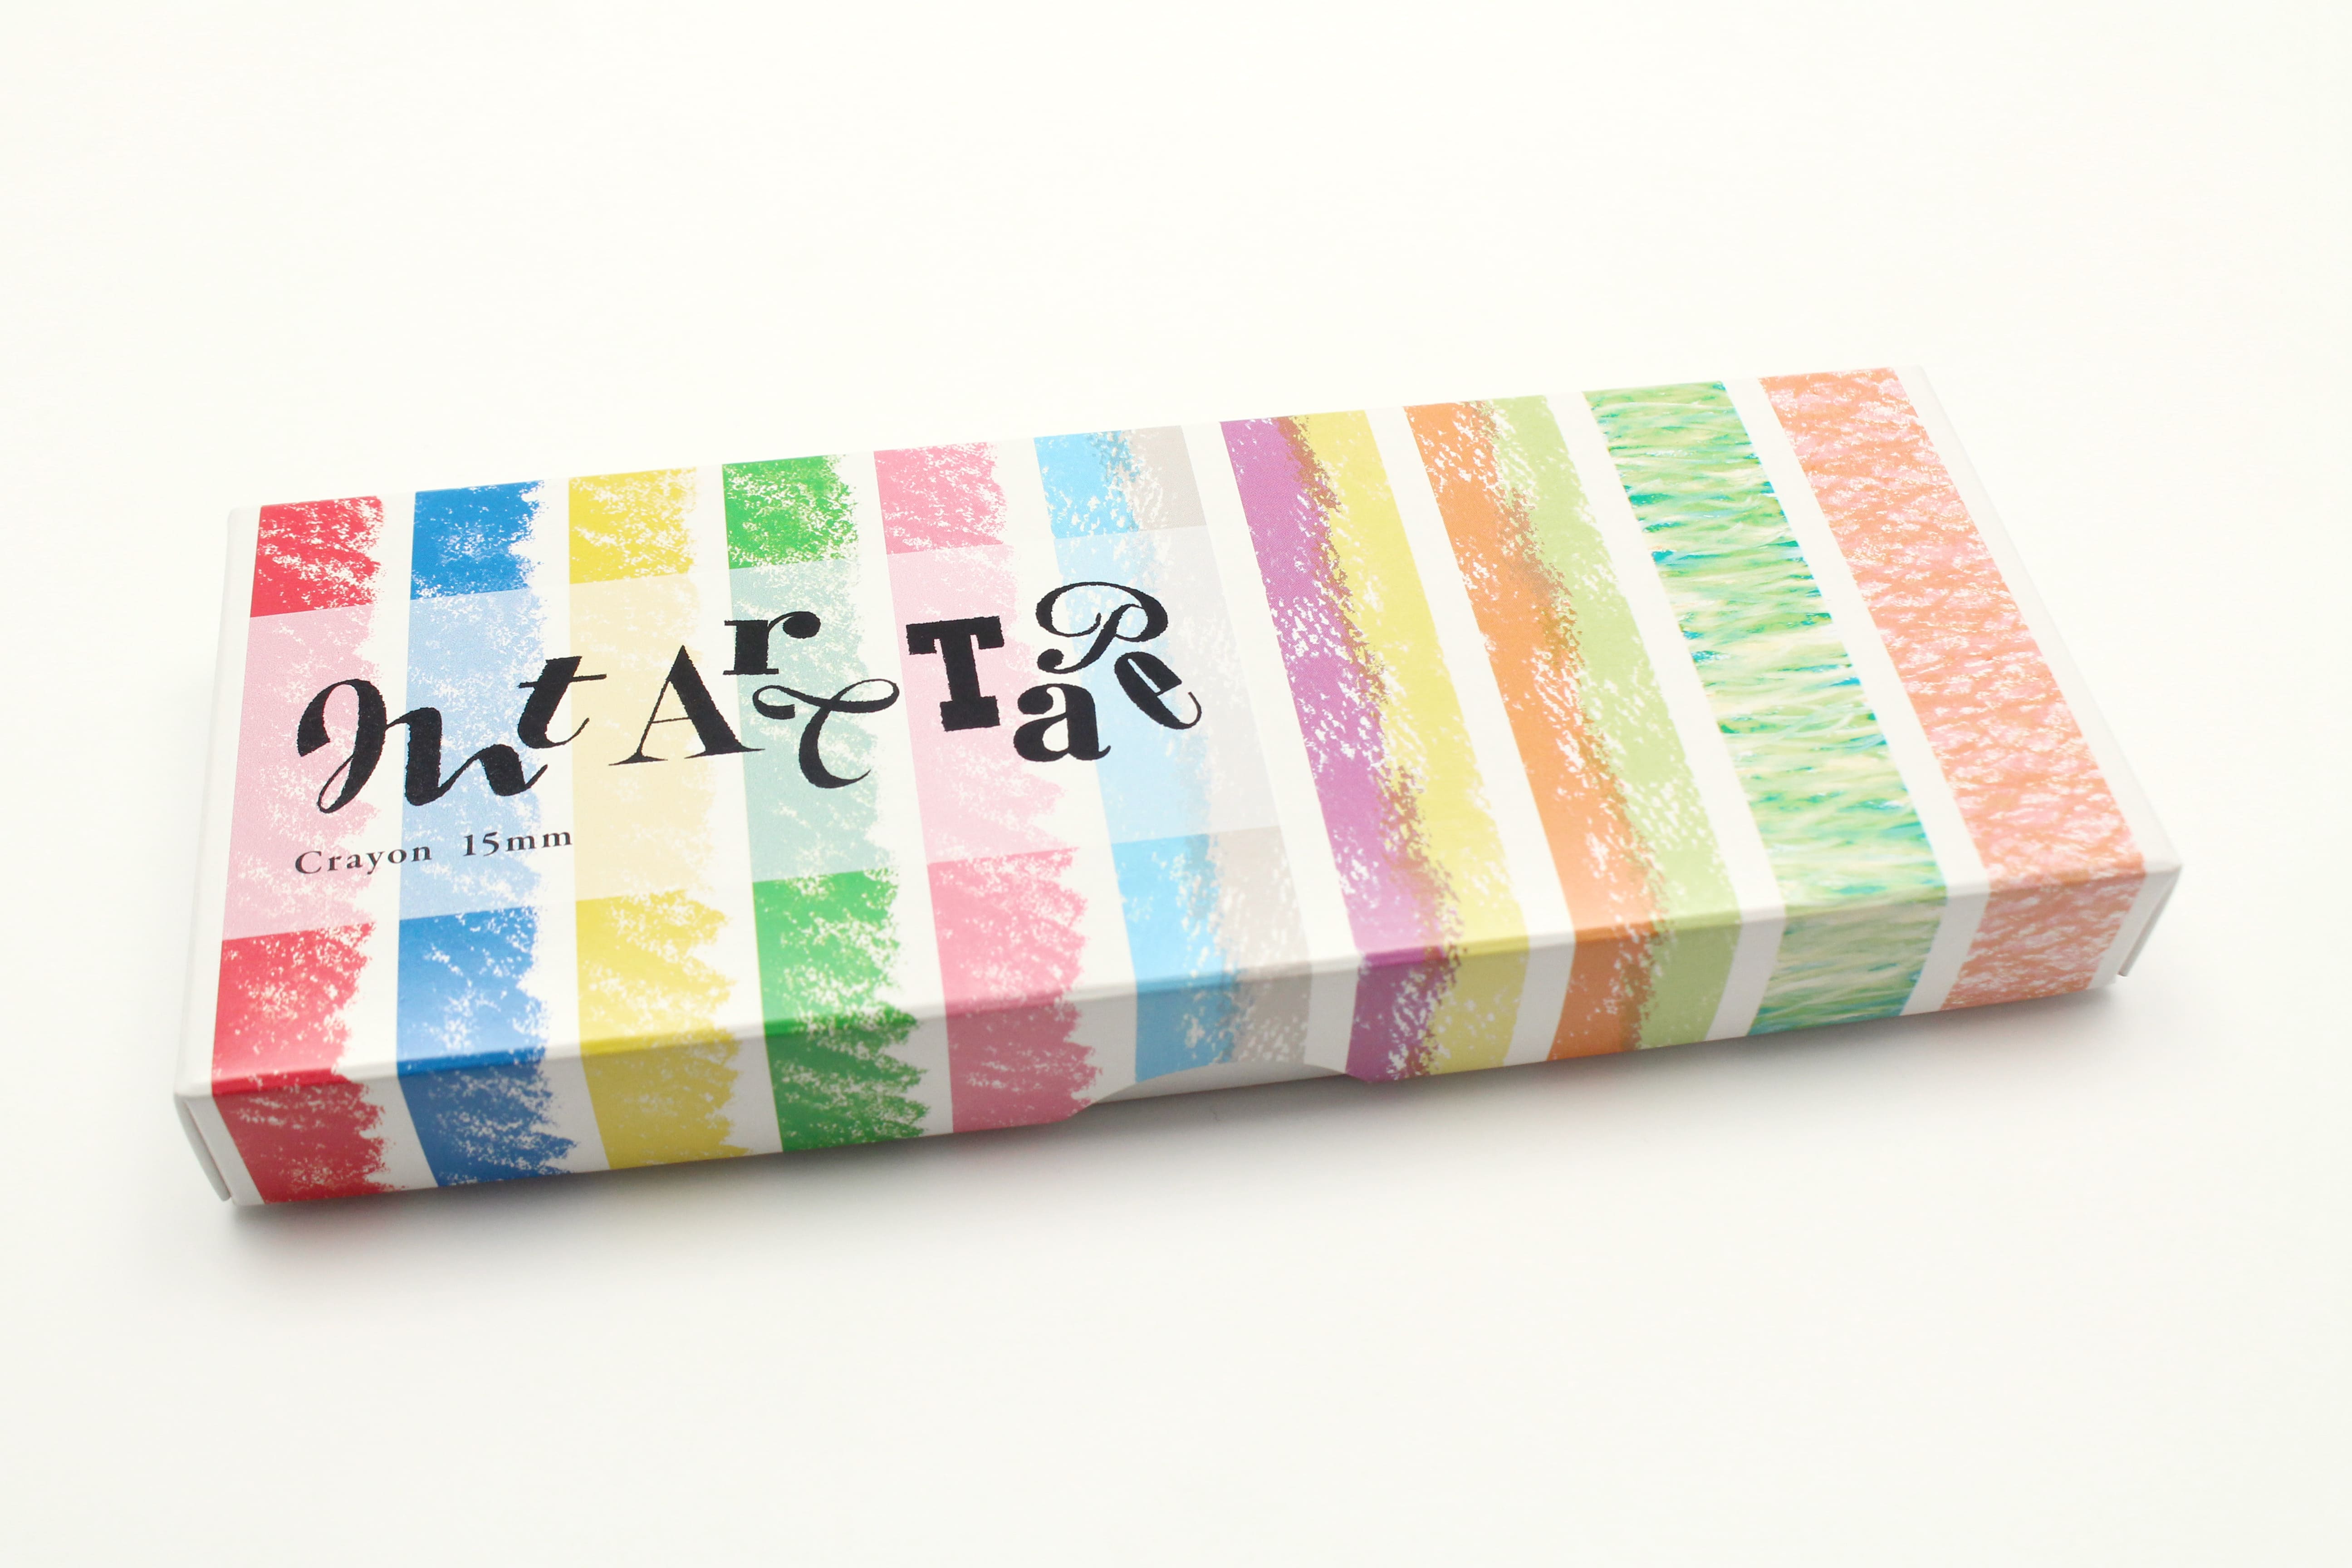 mt fab - Art Tape Crayon - 15mm Washi Tape Set of 10